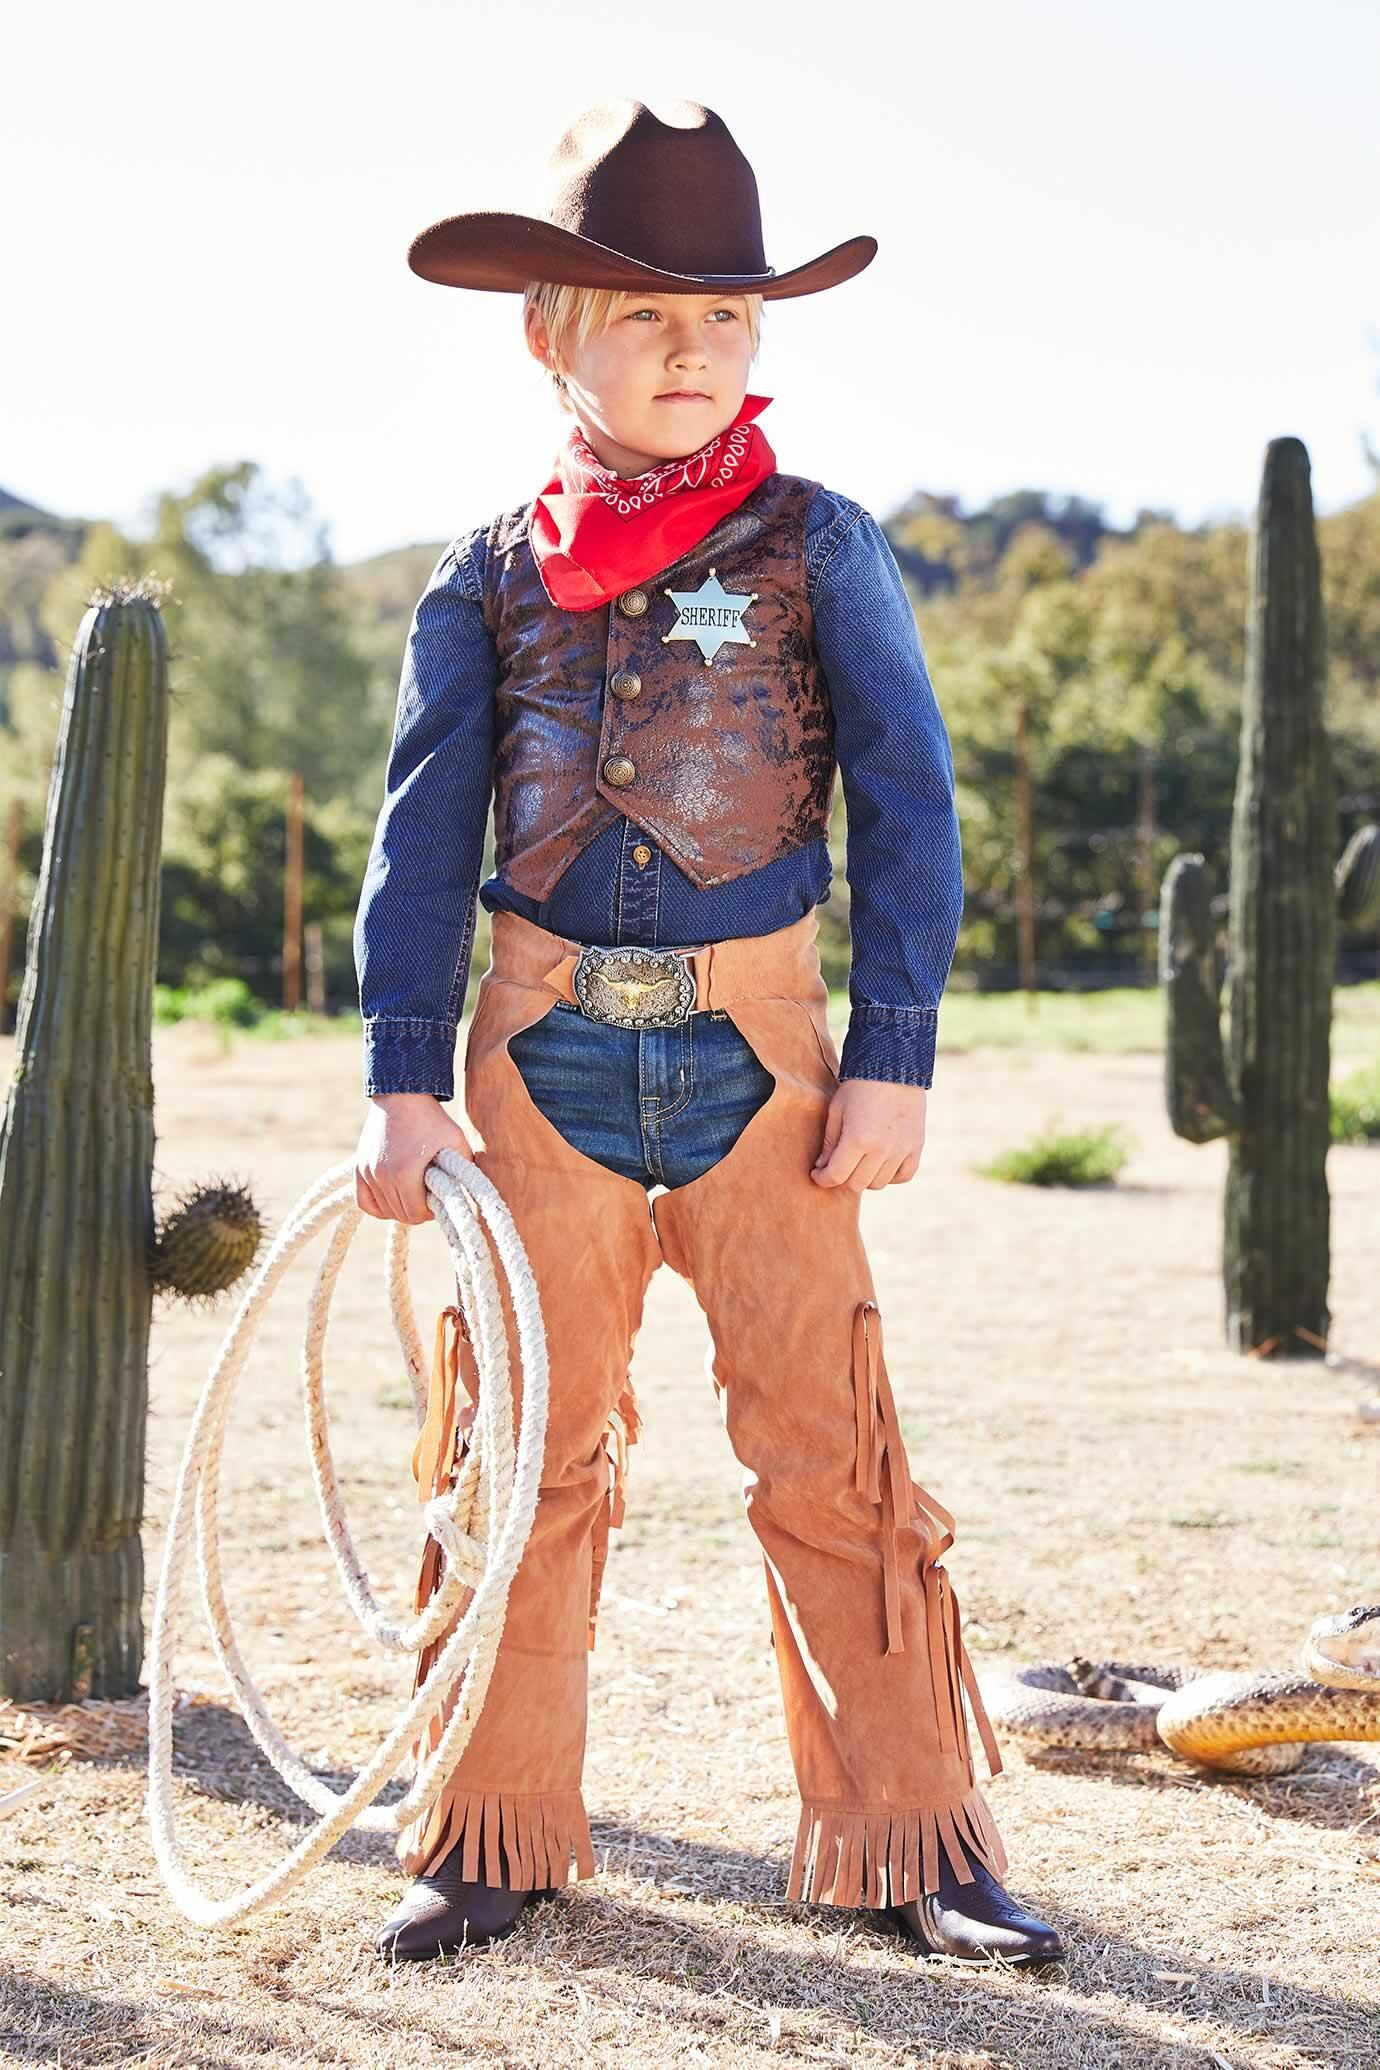 DIY Toddler Cowboy Costume
 Cowboy Costume for Kids Chasing Fireflies